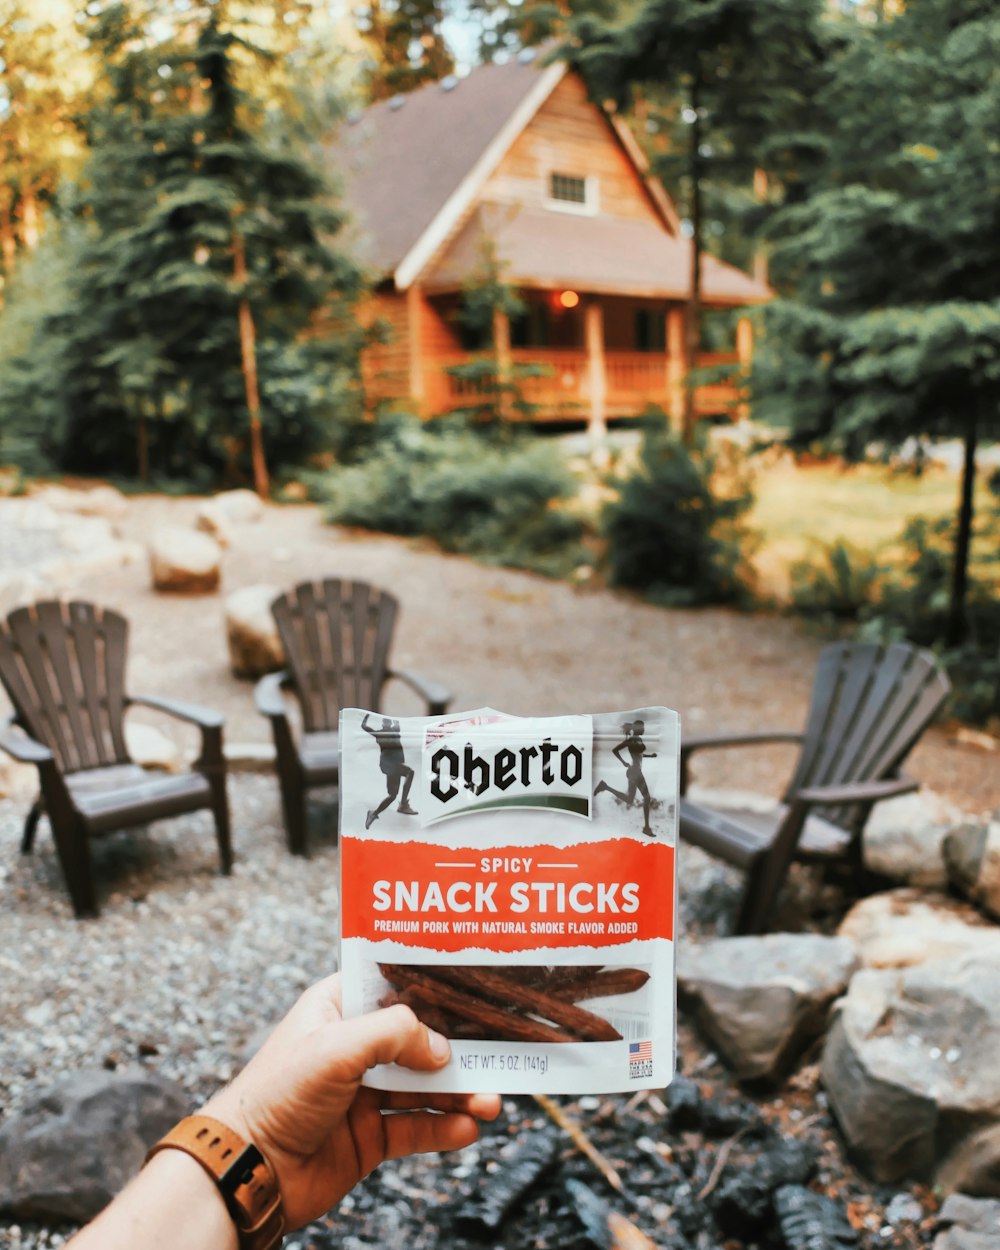 Cherto spicy snack sticks pack